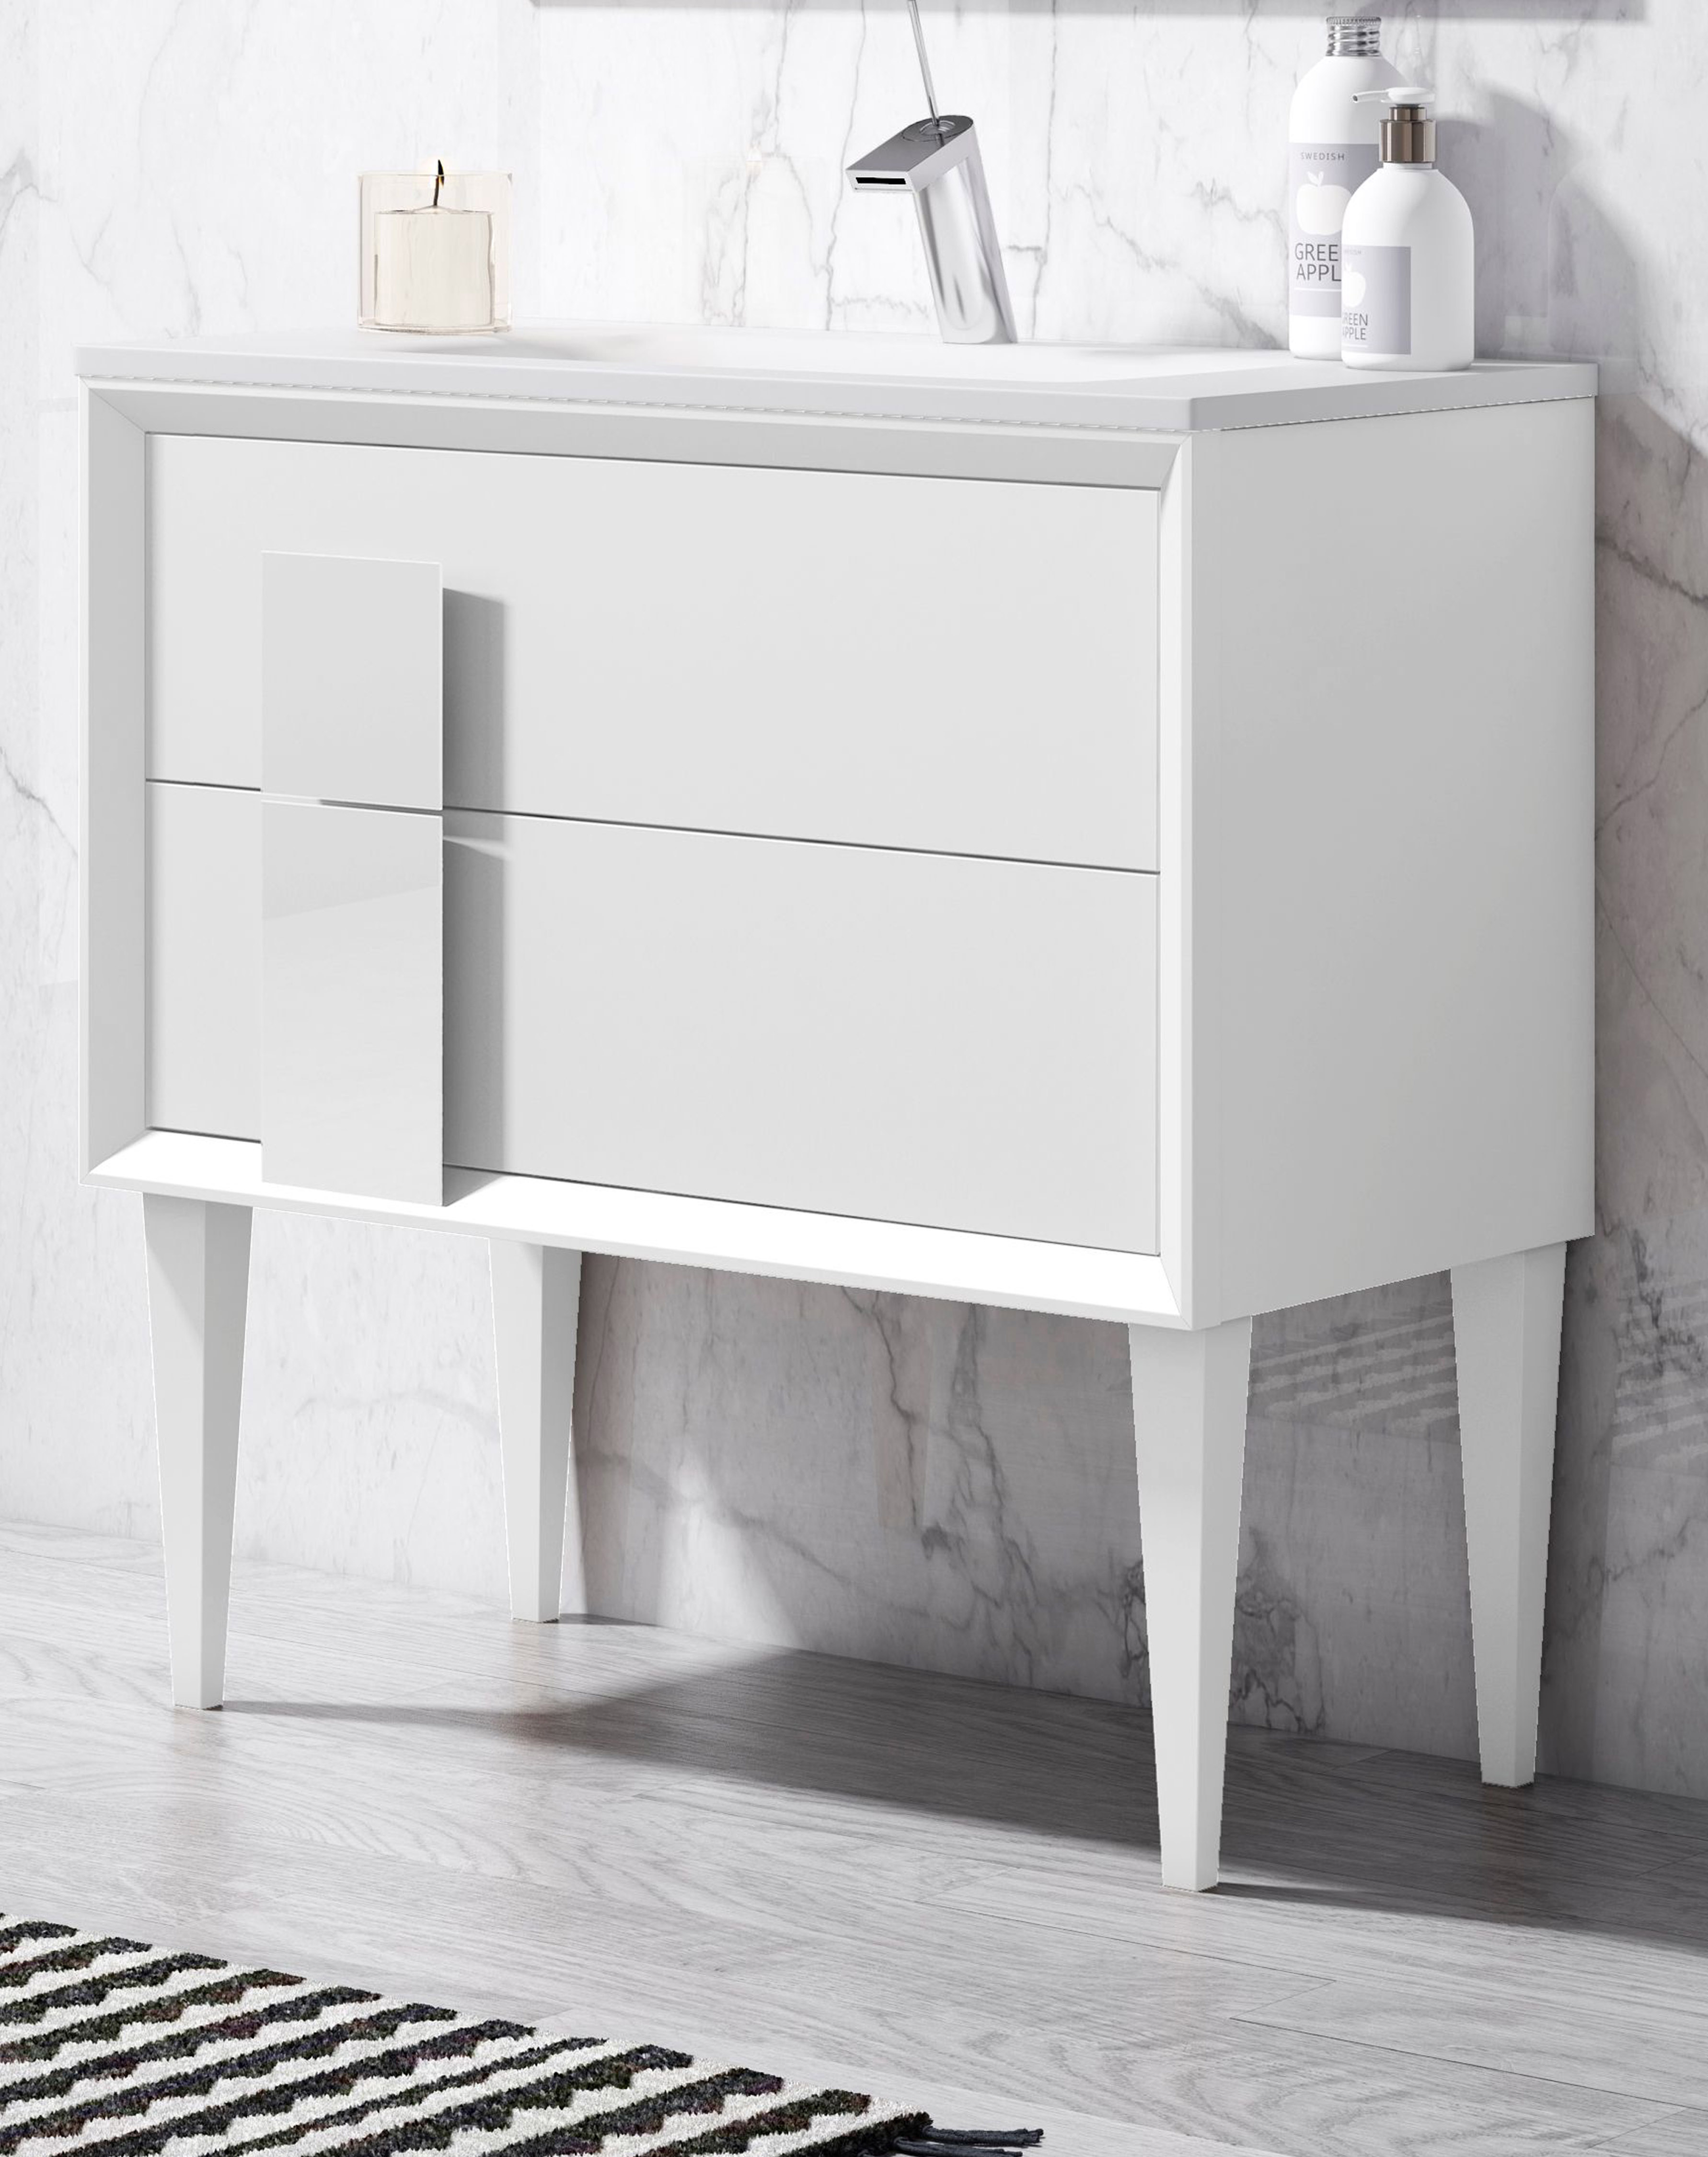 32" Free Standing Single Sink Bathroom Vanity 2 Drawer Ceramic Sink with 5 Color Options